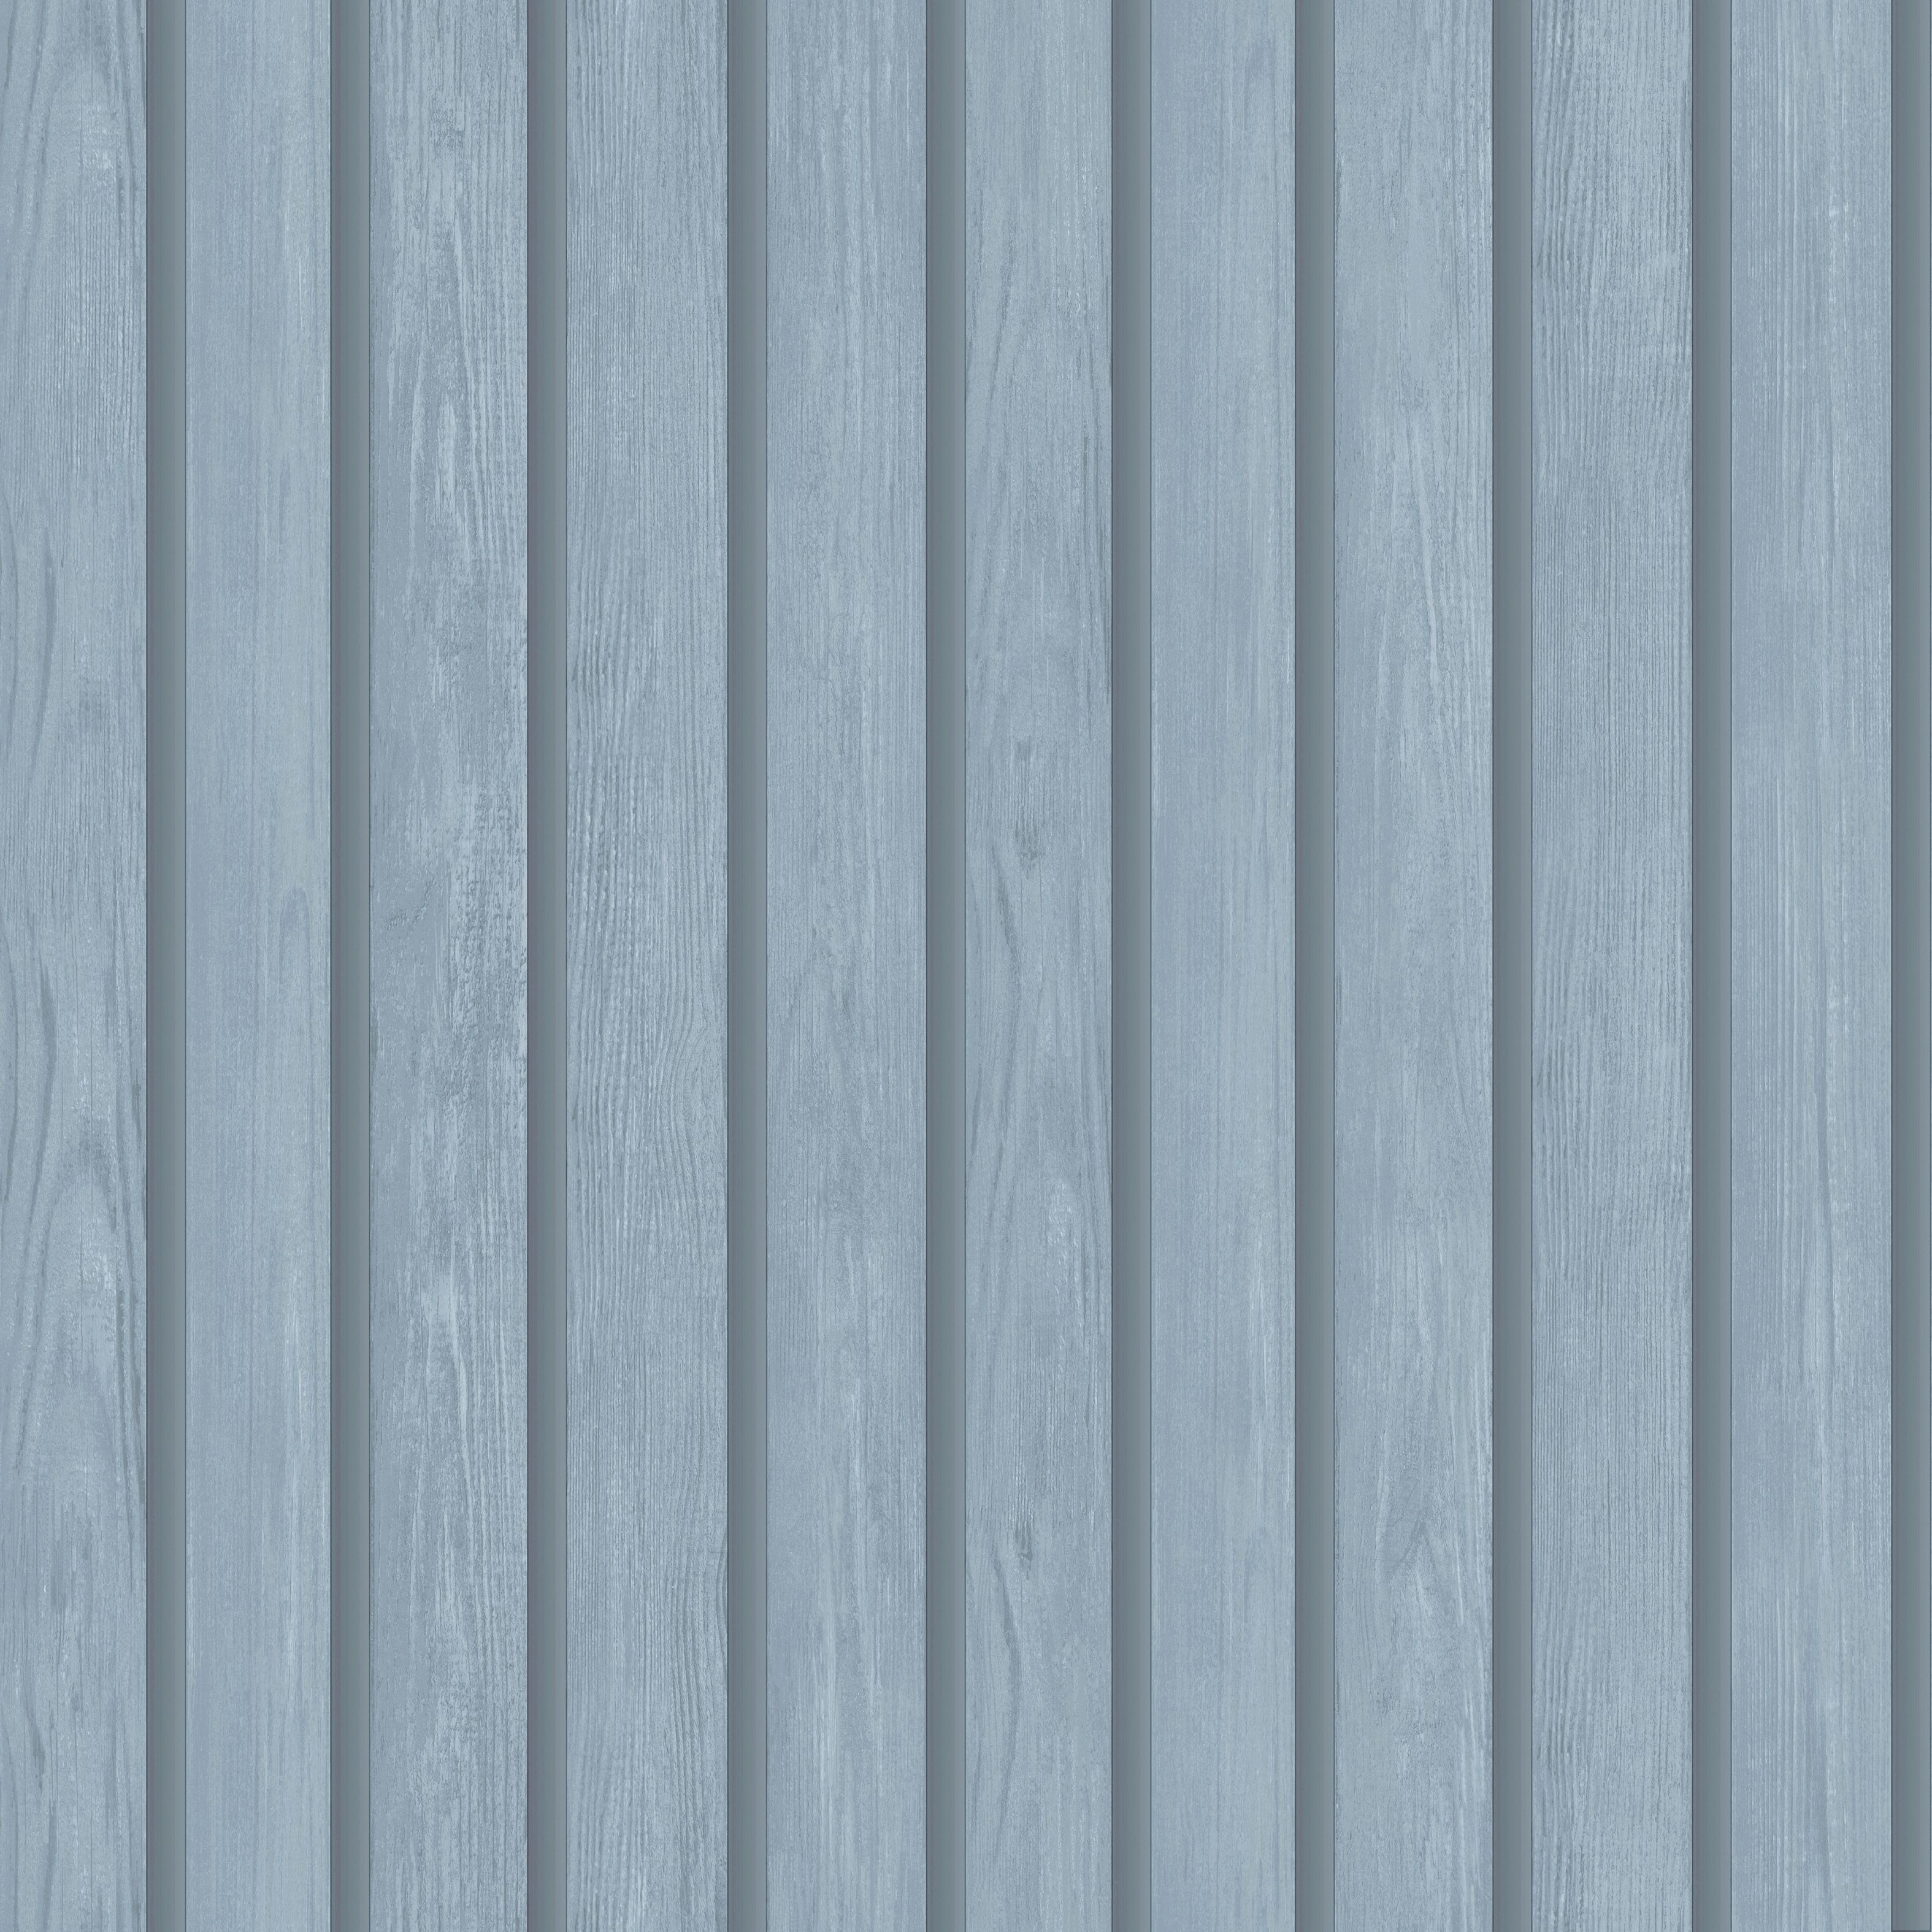 Image of Holden Decor Wood Slat Blue Wallpaper - 10.05m x 53cm